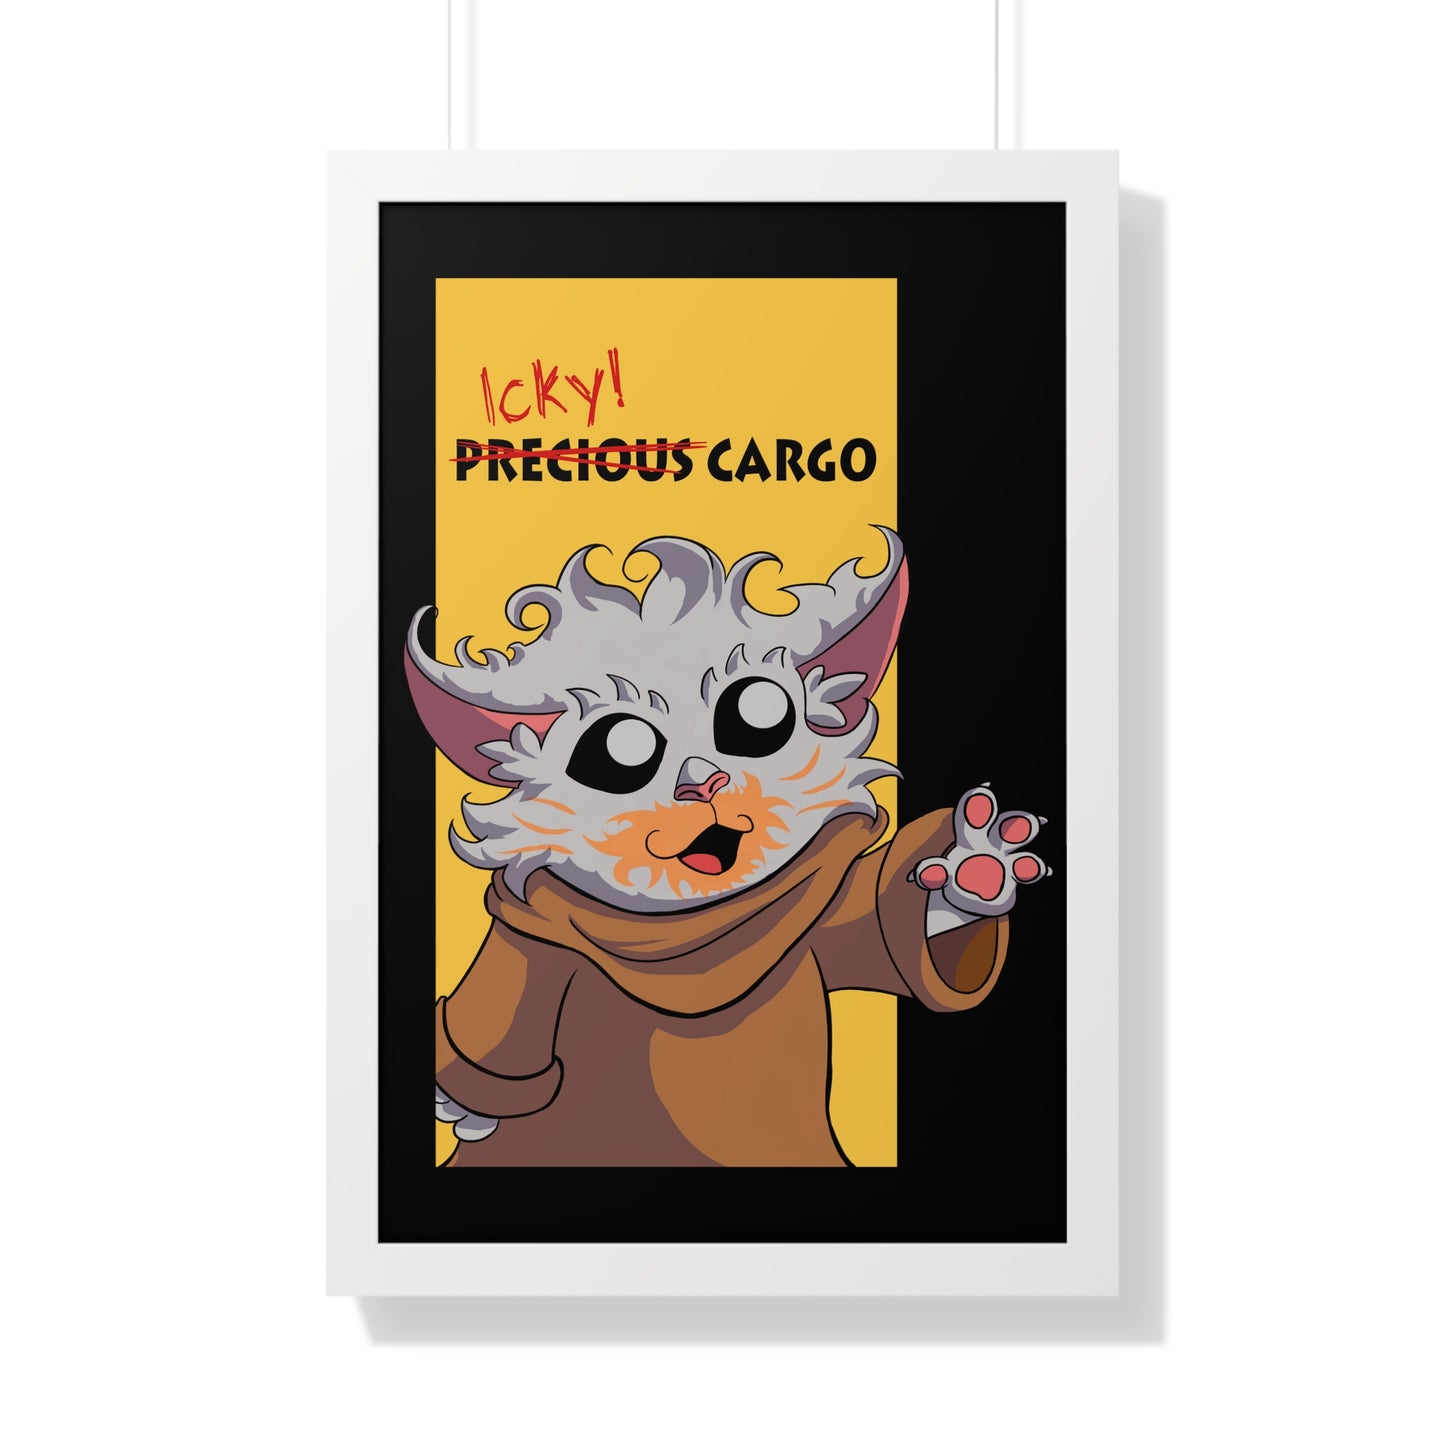 Icky Cargo Framed Poster - Wisp Campaign